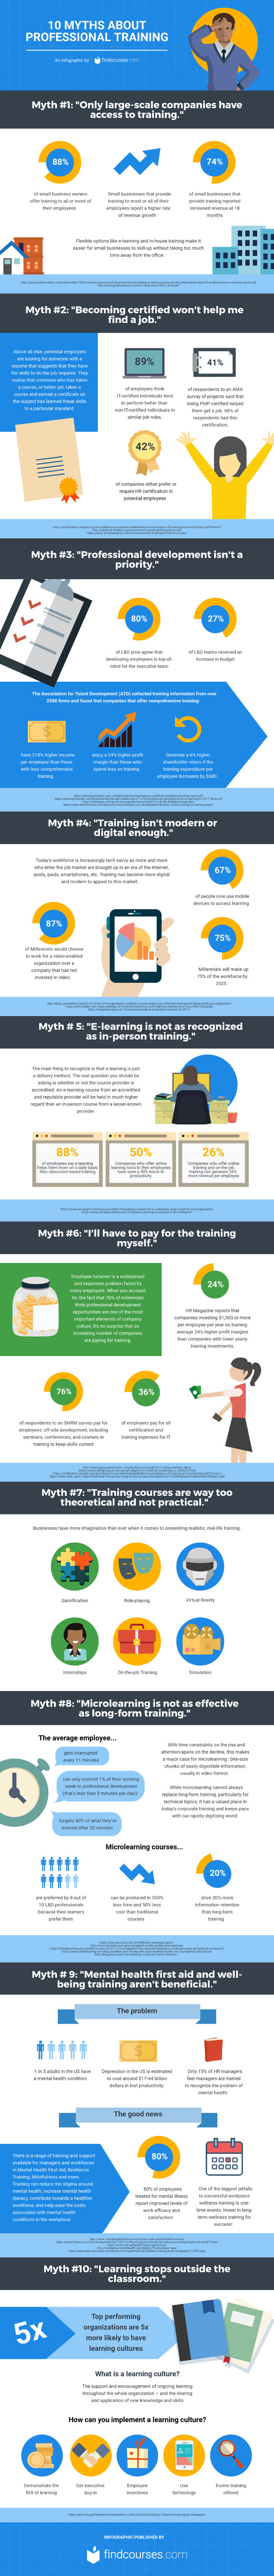 Common professional training myths